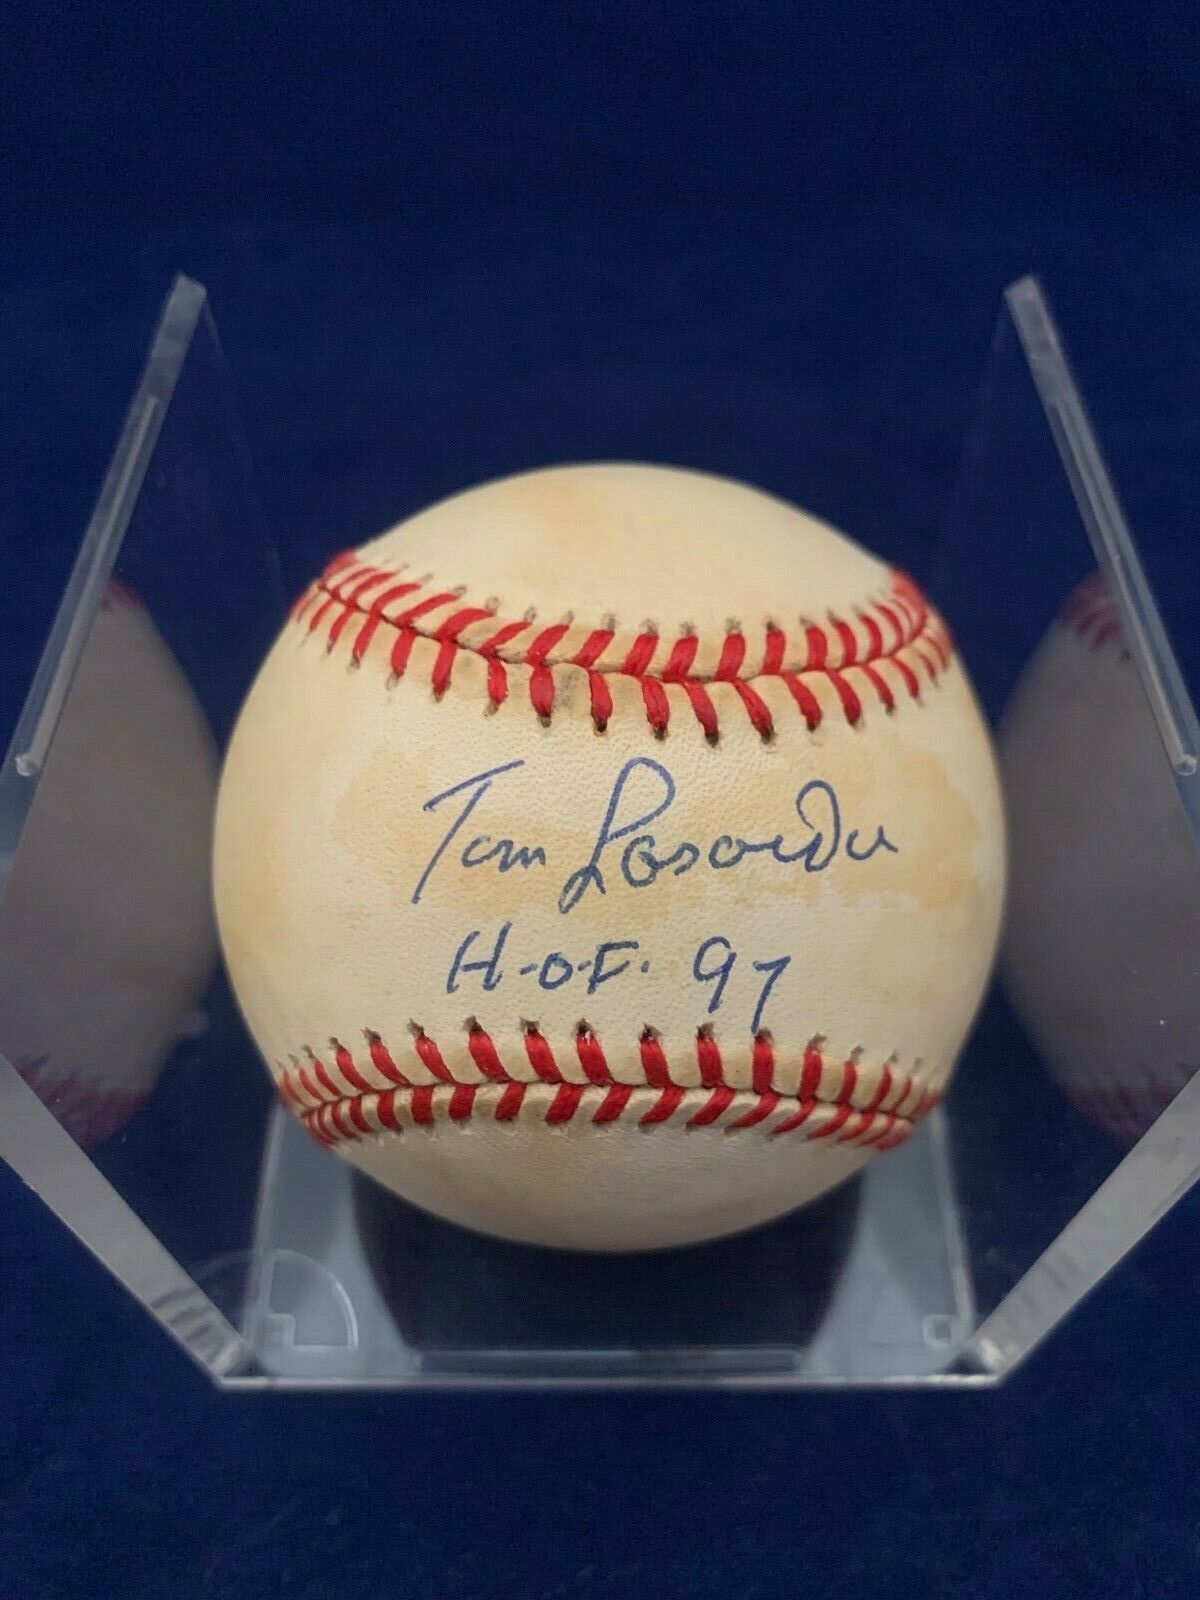 Tom Lasorda Older Autograph on Rawlings Baseball HOF 97 Inscription with JSA COA